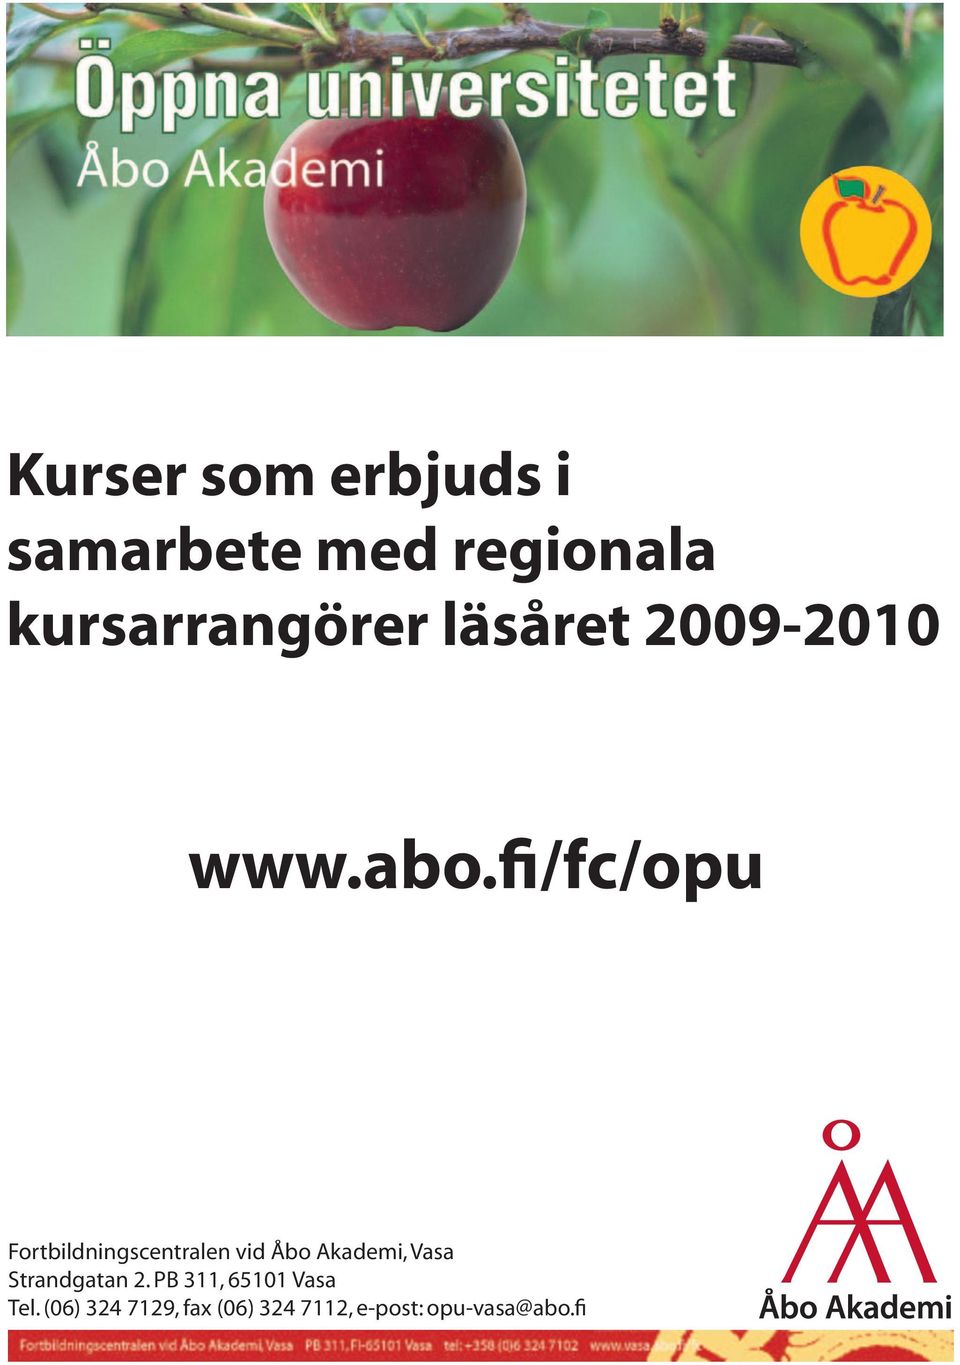 fi/fc/opu Fortbildningscentralen vid Åbo Akademi, Vasa